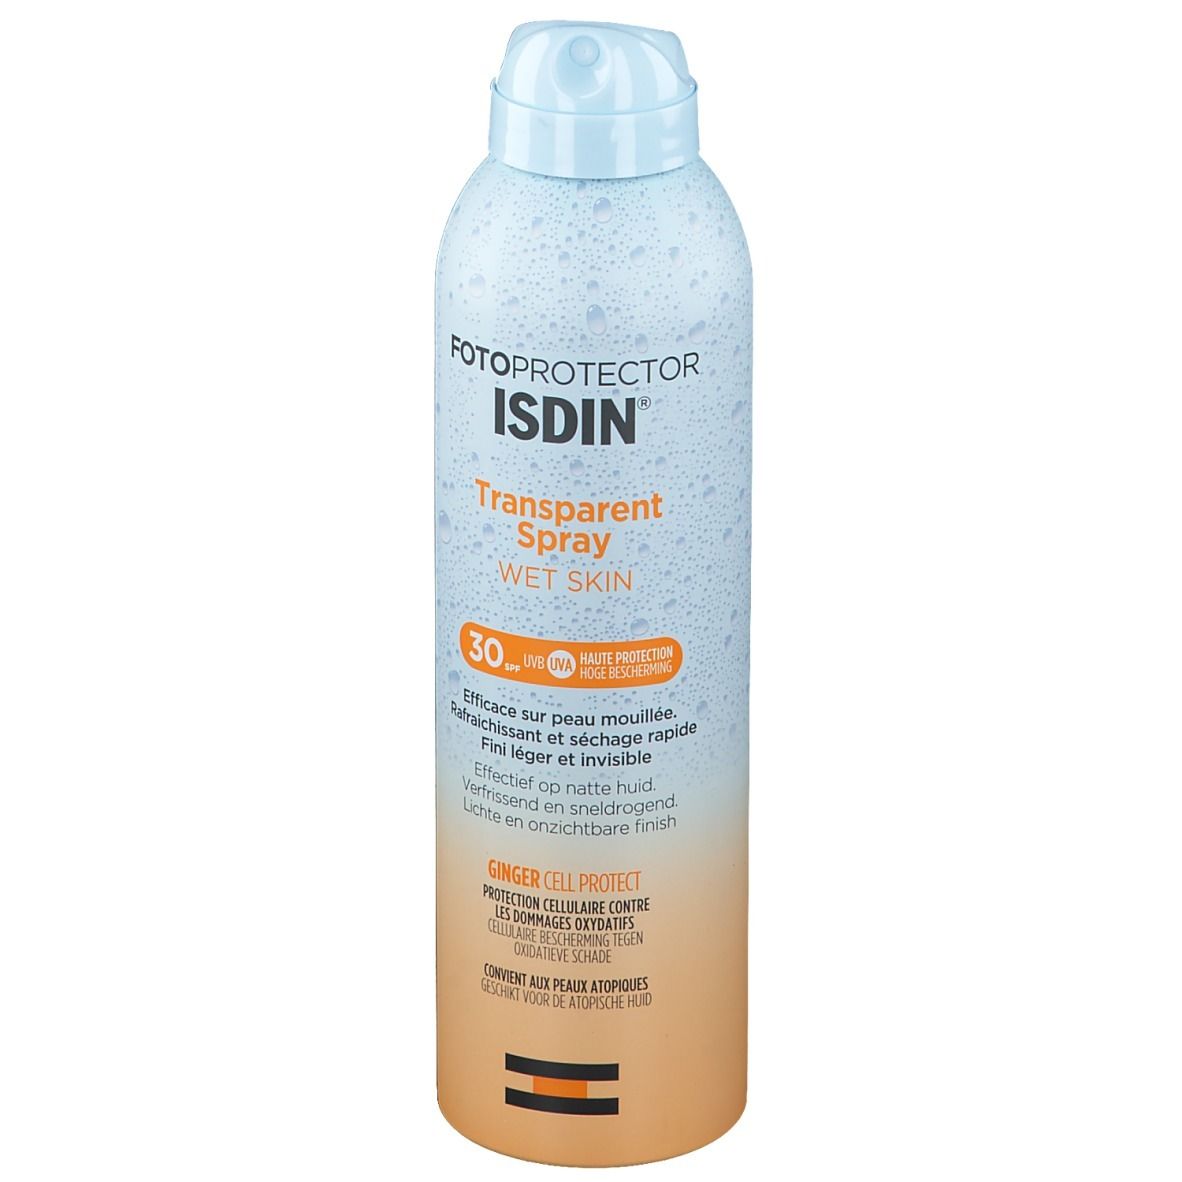 FOTOPROTECTOR ISDIN® Transparent Spray Wet Skin